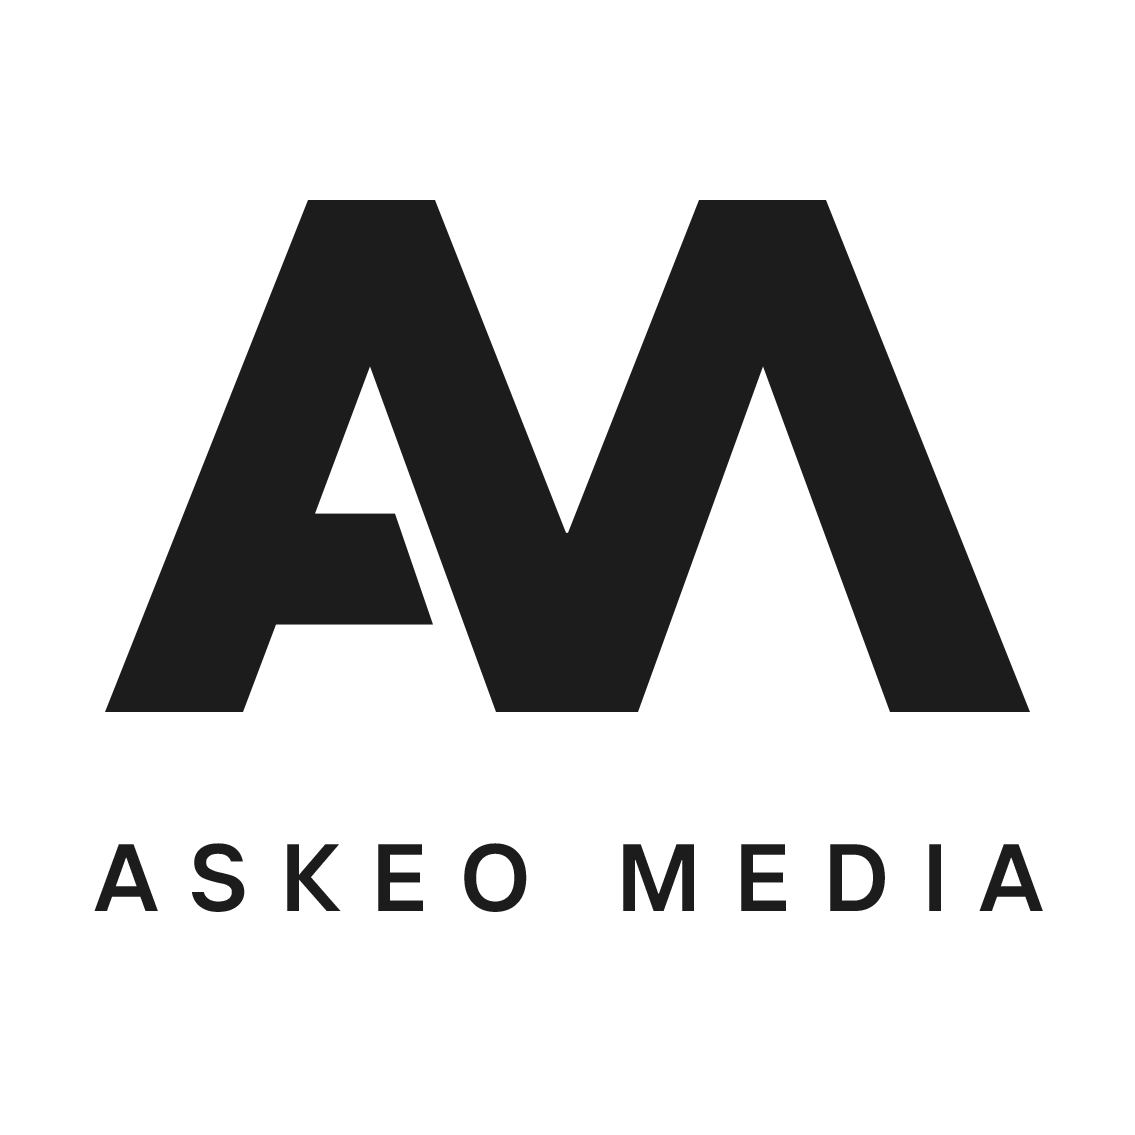 Askeo Media